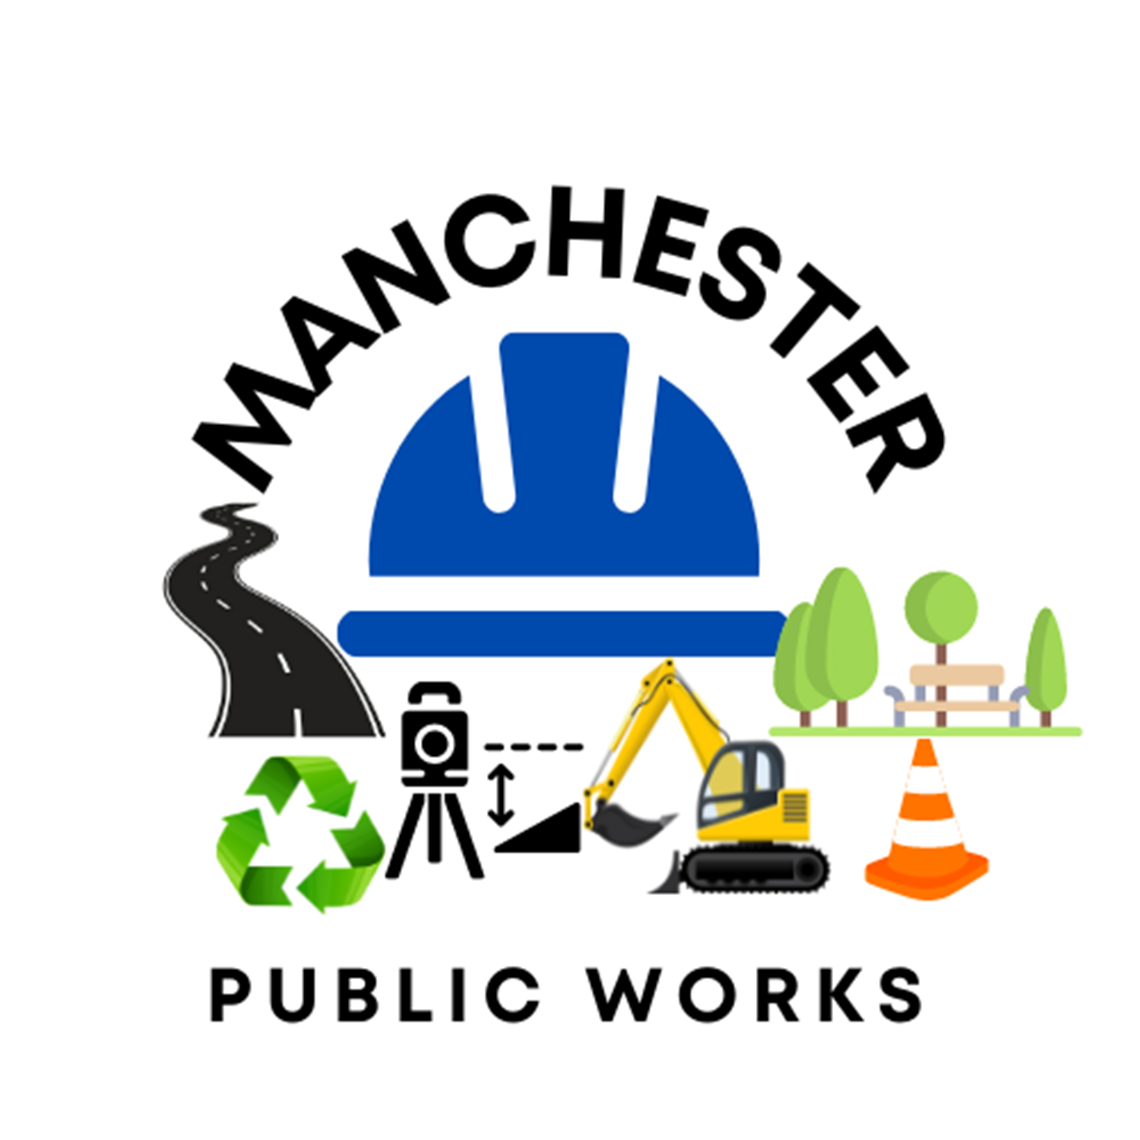 Manchester Public Works logo.png